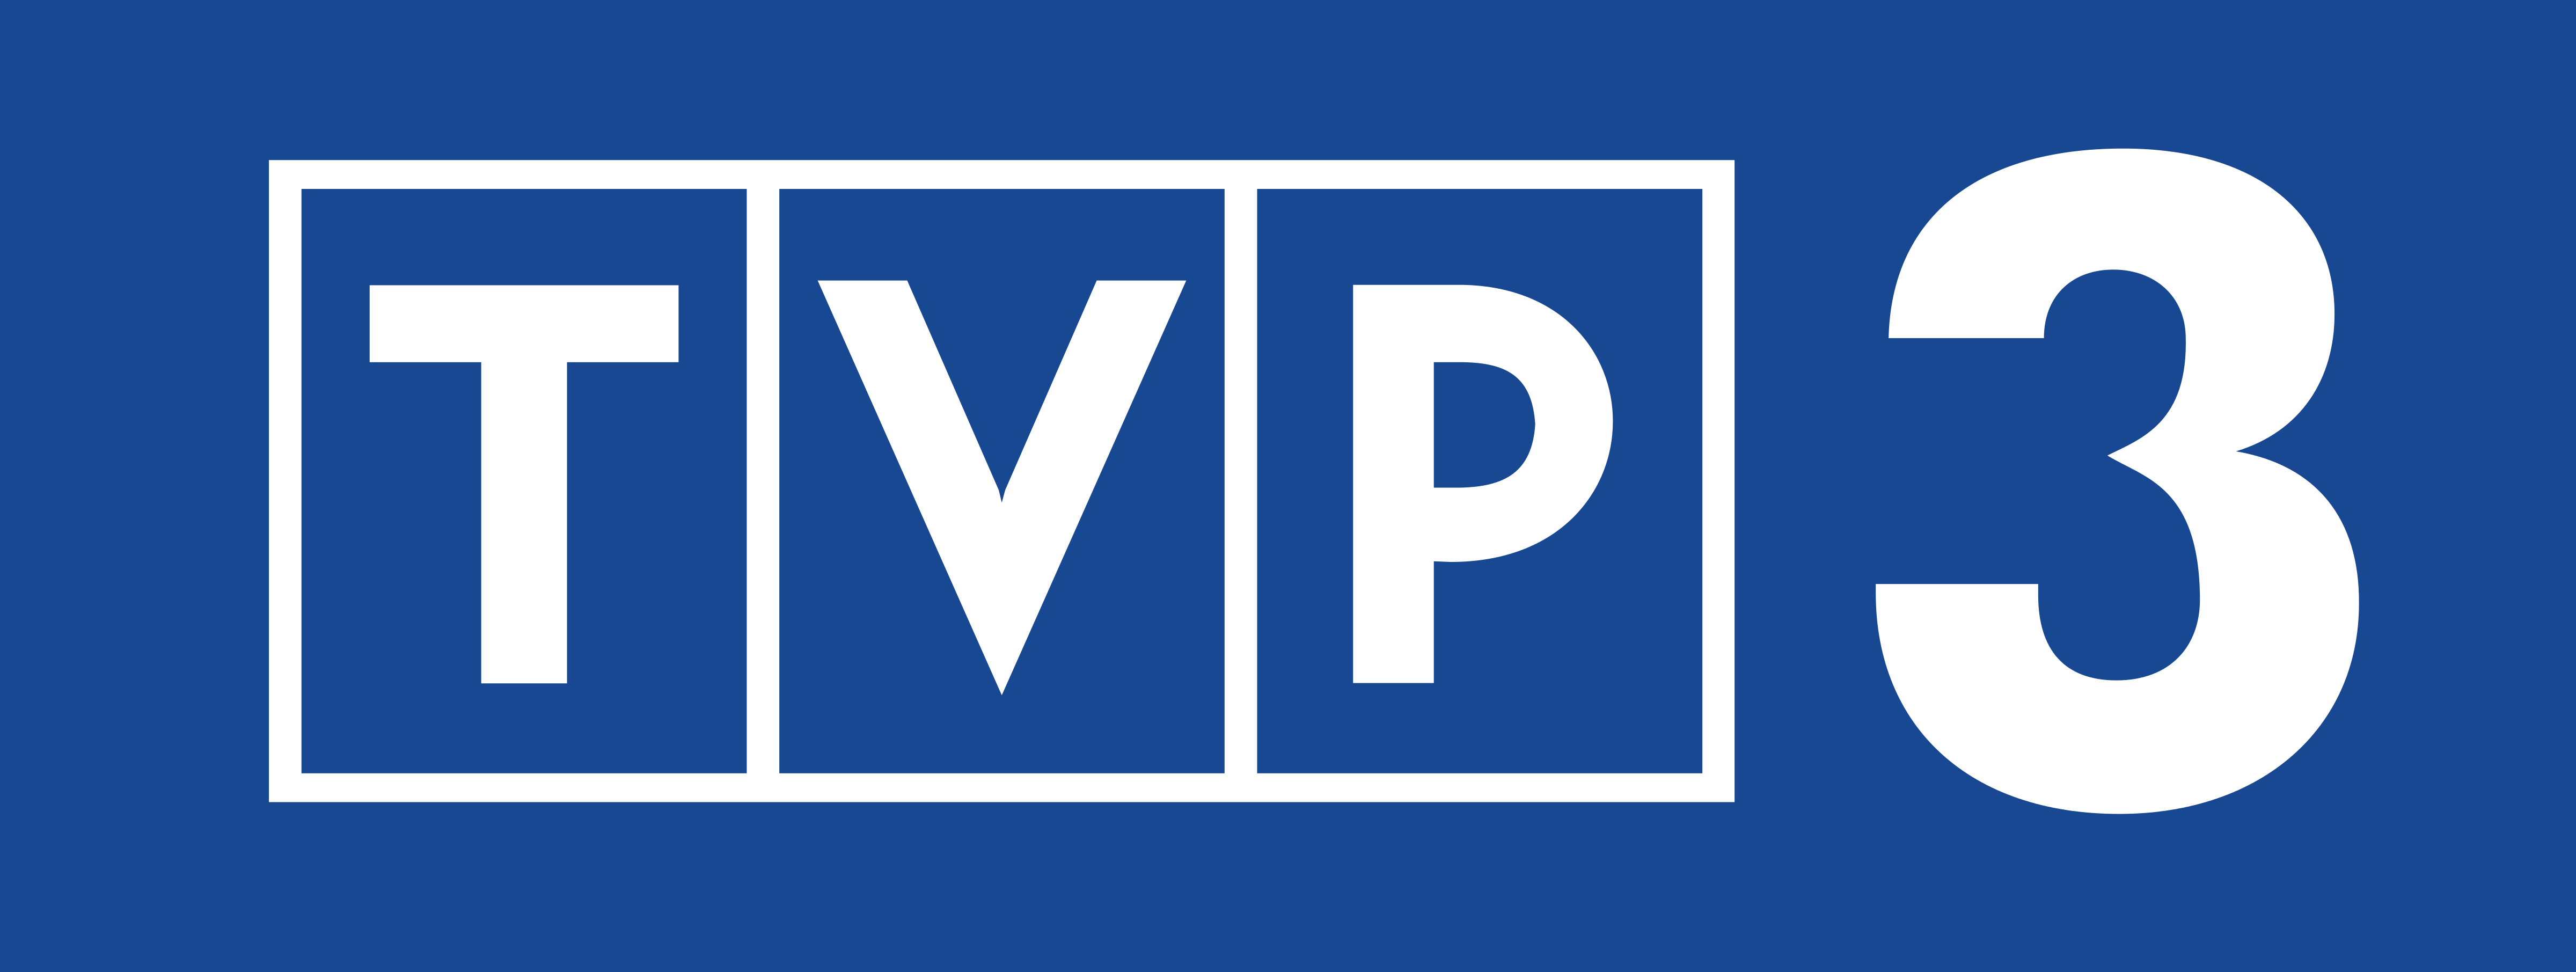 TVP3 logo 2016